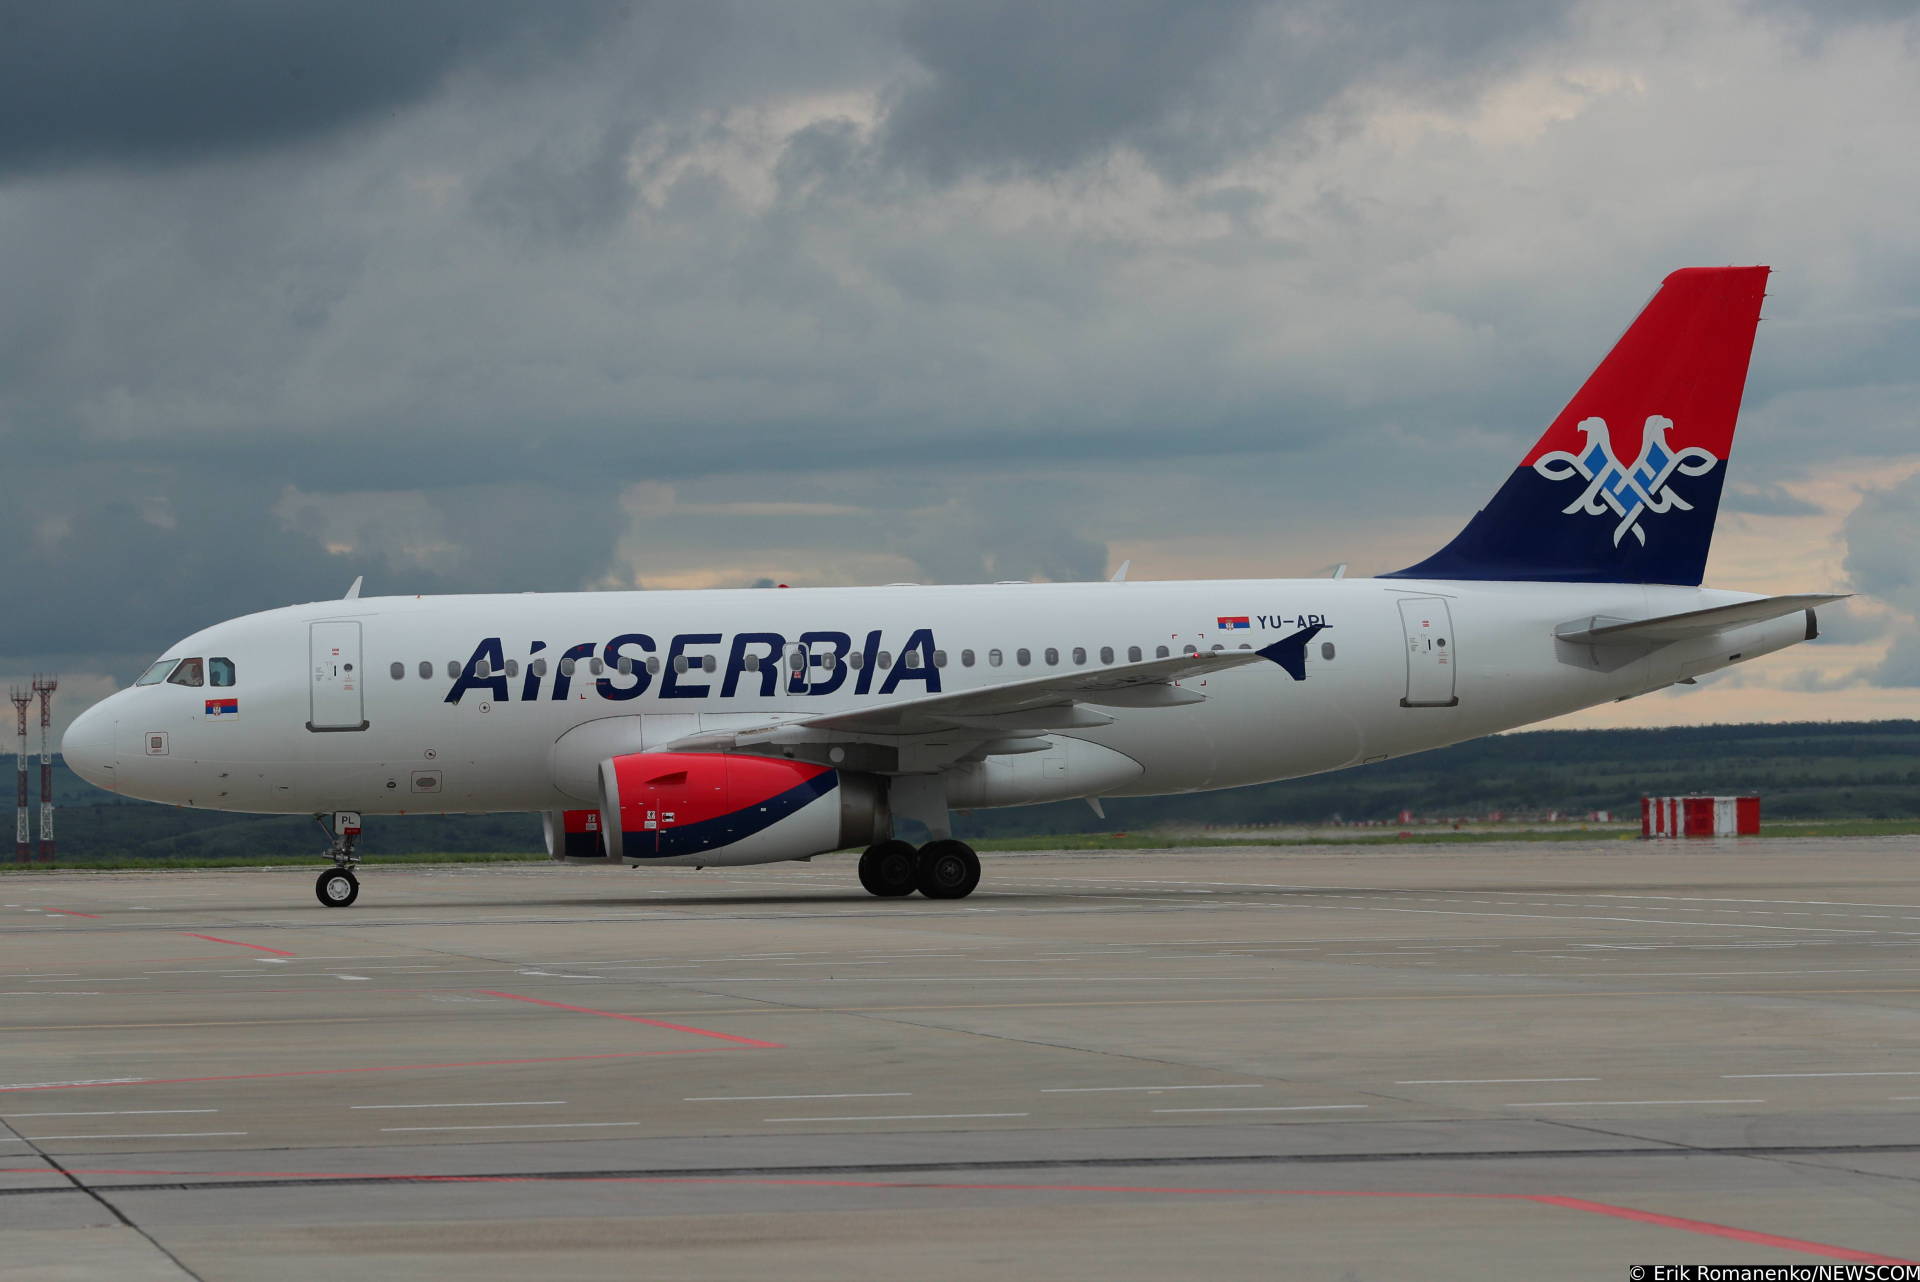 air-serbia-er-srbija-avion-zrakoplov-fotoerikromanenkotassphotonewscompixsell.jpg